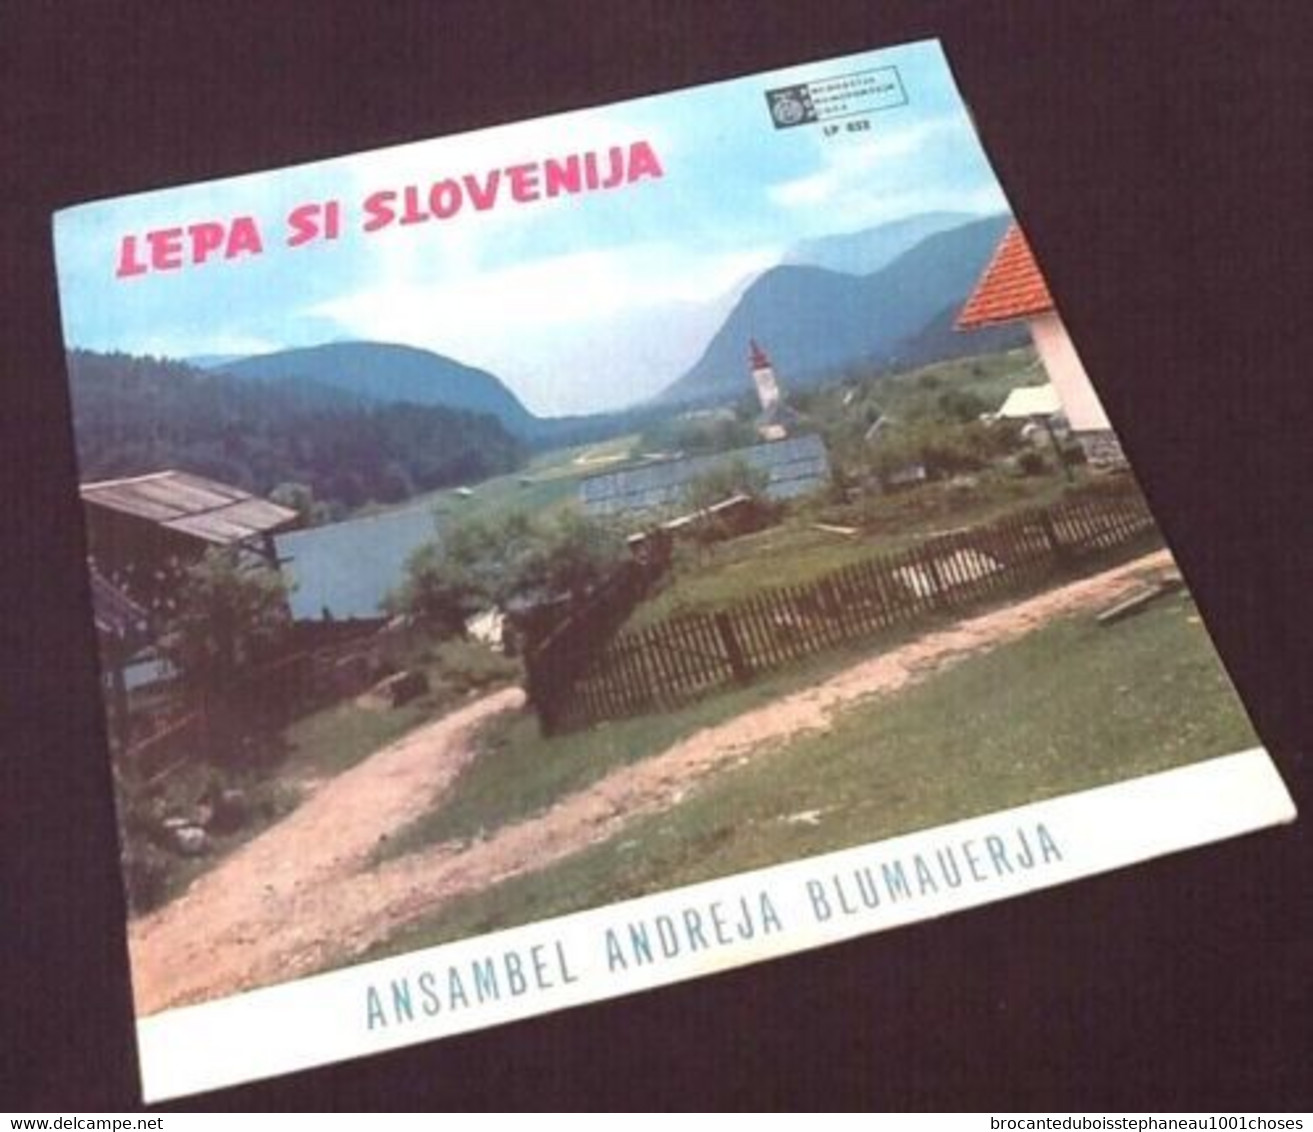 Vinyle 33 Tours (25cm)  Ansambel Andreja Blumaurja  Lepa Si Slovenia (1967) LP 022 - Spezialformate